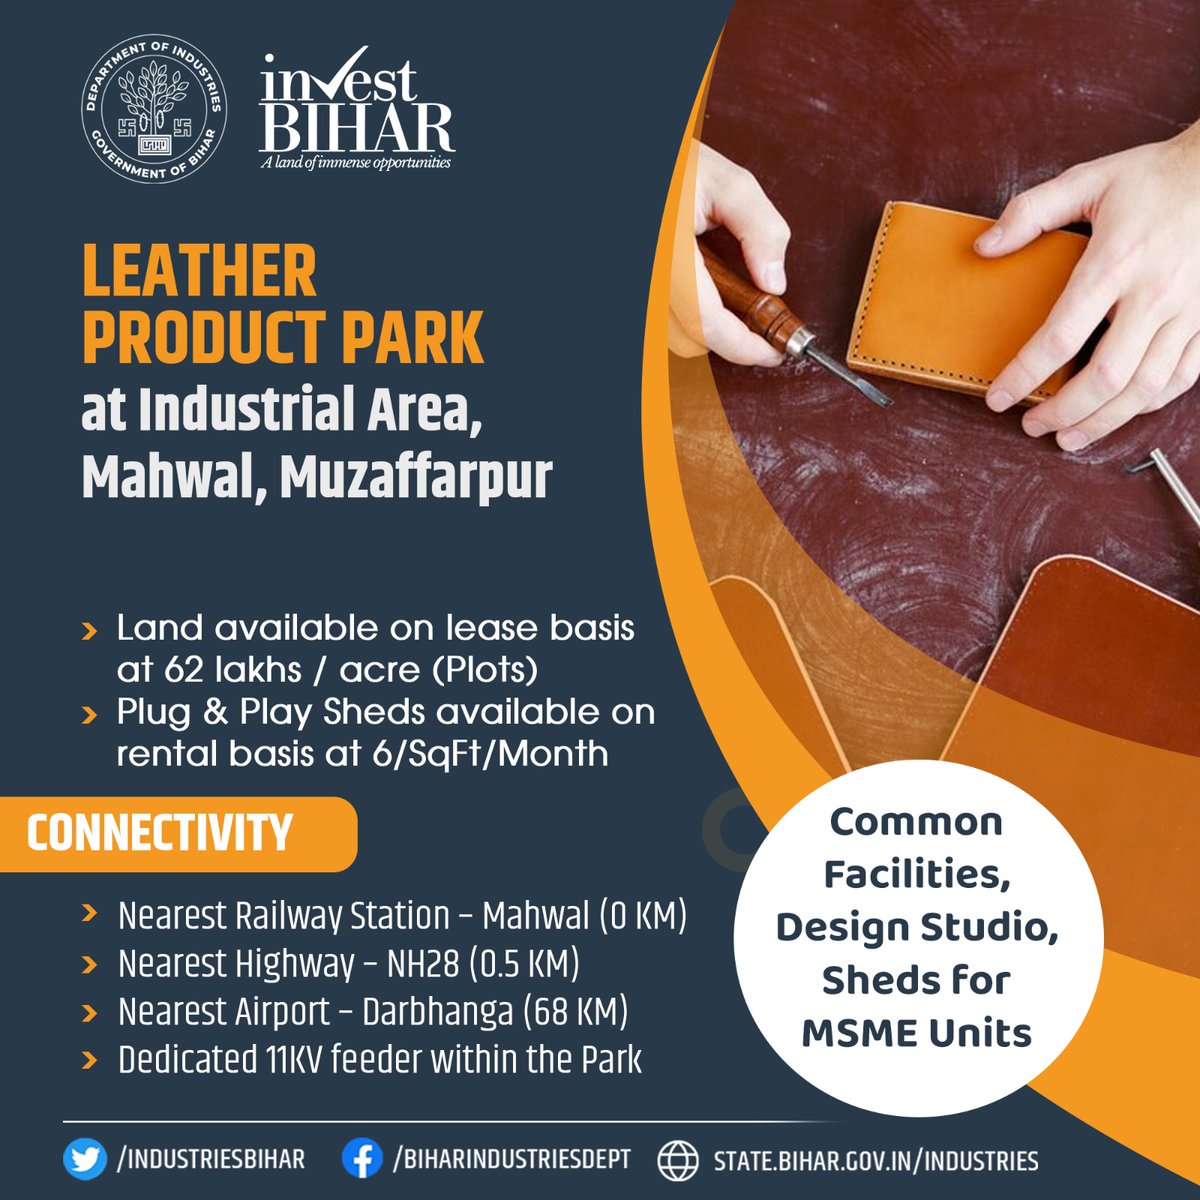 #Bihar, Opportunities like nowhere else. Leather Product Park,land available for lease. #IndustriesBihar #BIHARHAITAIYAR #InvestInBihar @SandeepPoundrik @BIADAbihar